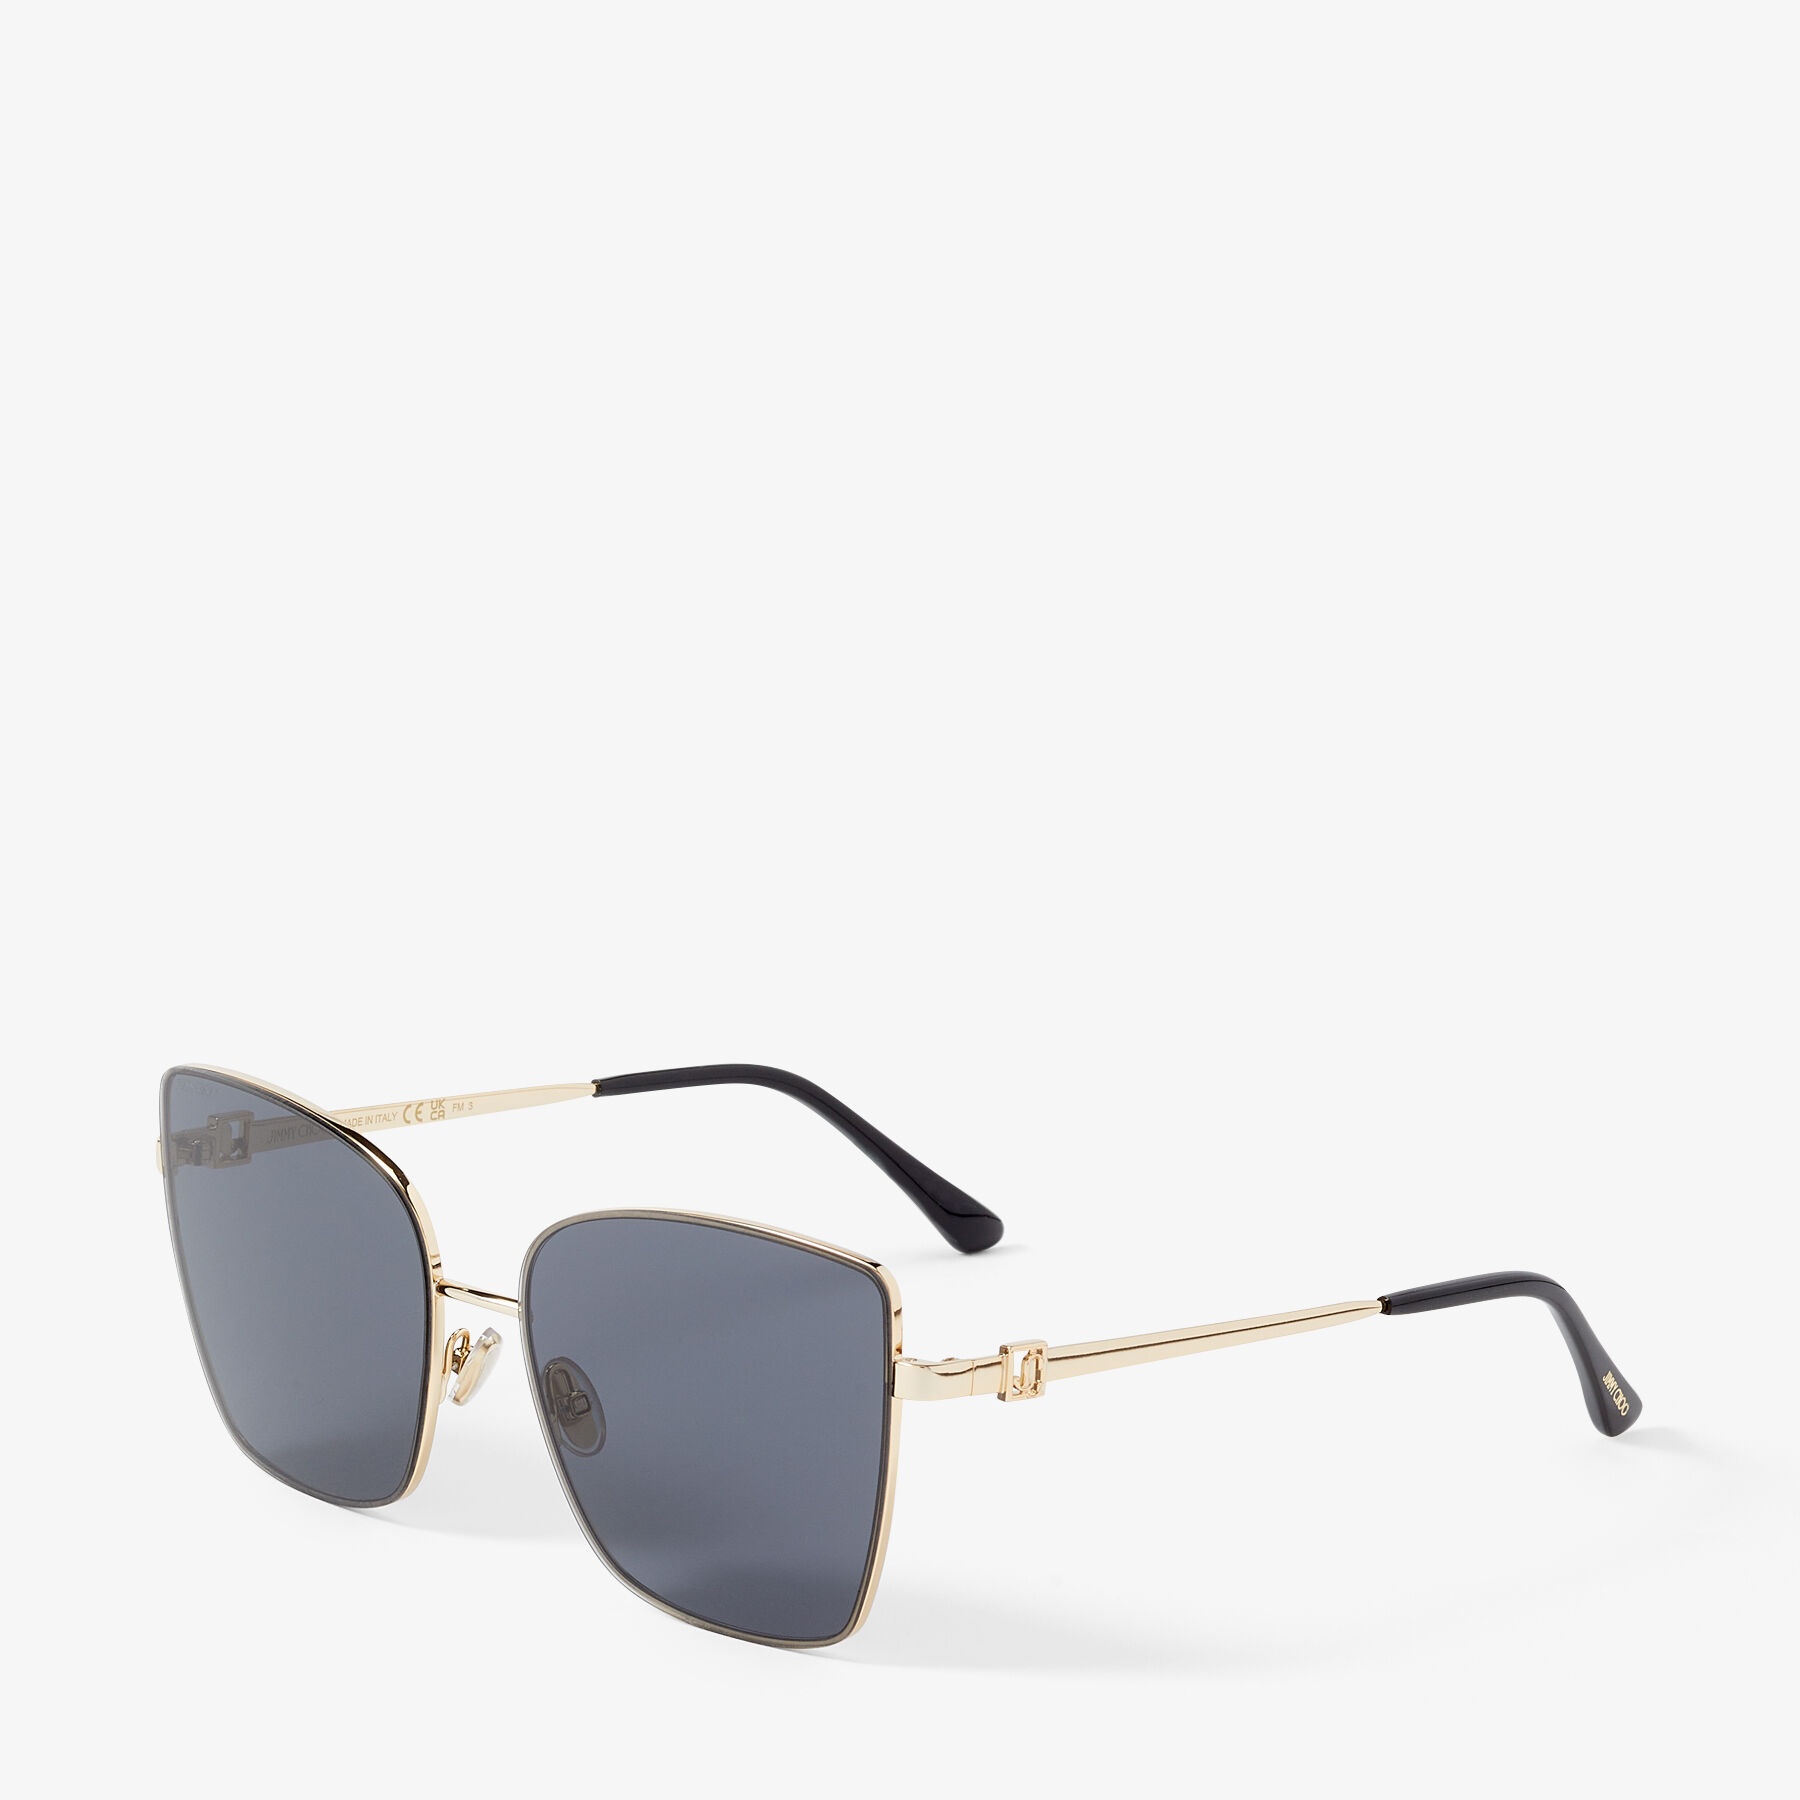 Vella/S 59
Rose Gold and Black Square Frame Sunglasses with JC Emblem - 3